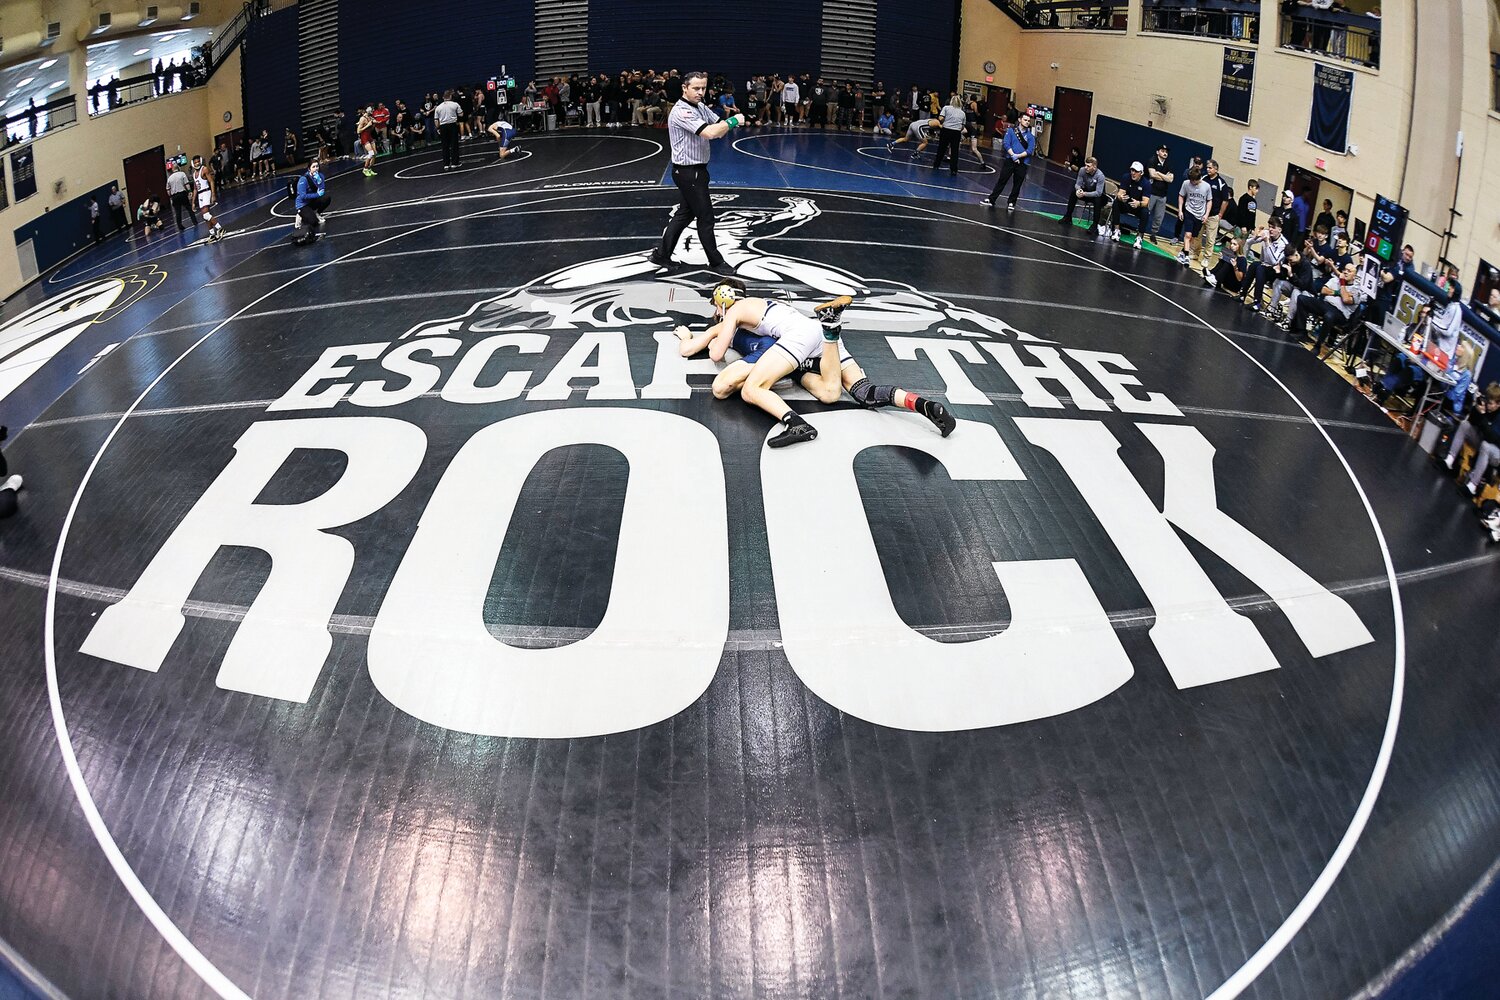 Council Rock South hosted the Escape the Rock tournament Jan. 13-14.